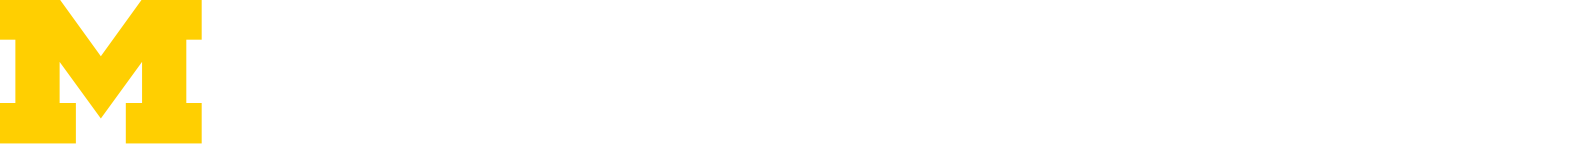 Student orgs logo